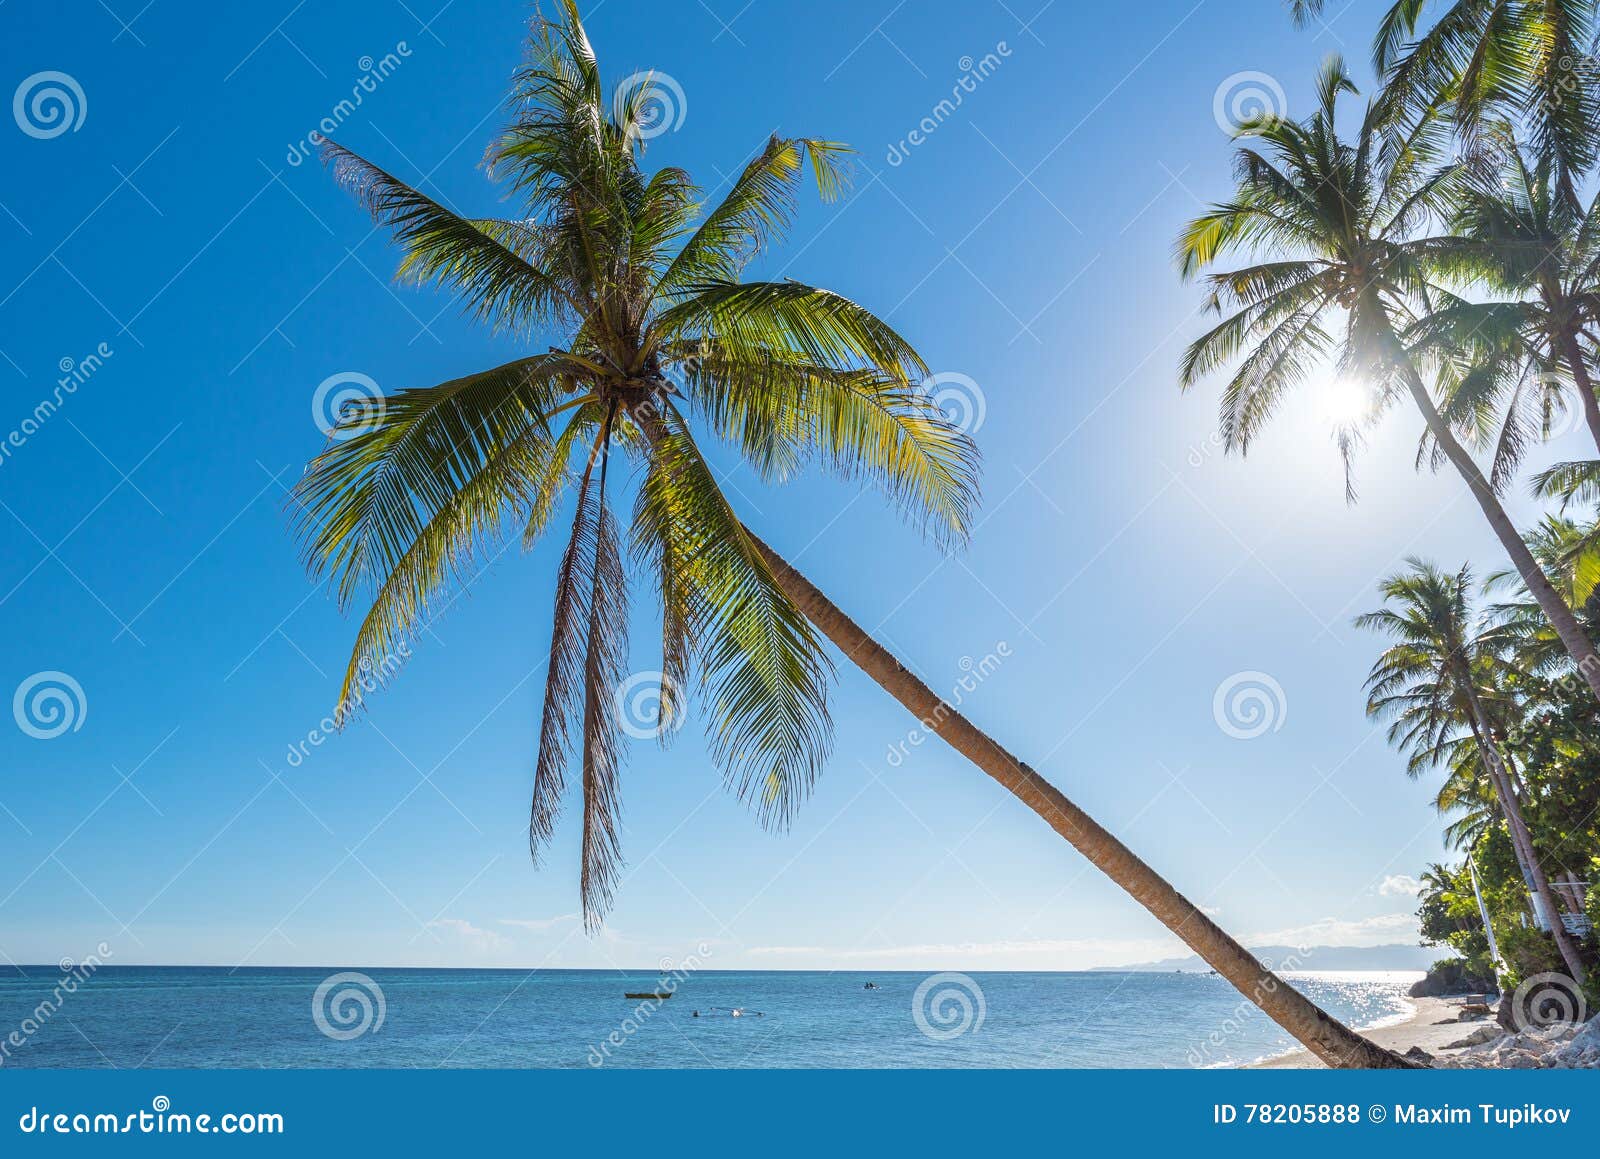 tropical beach background from anda beach bohol island